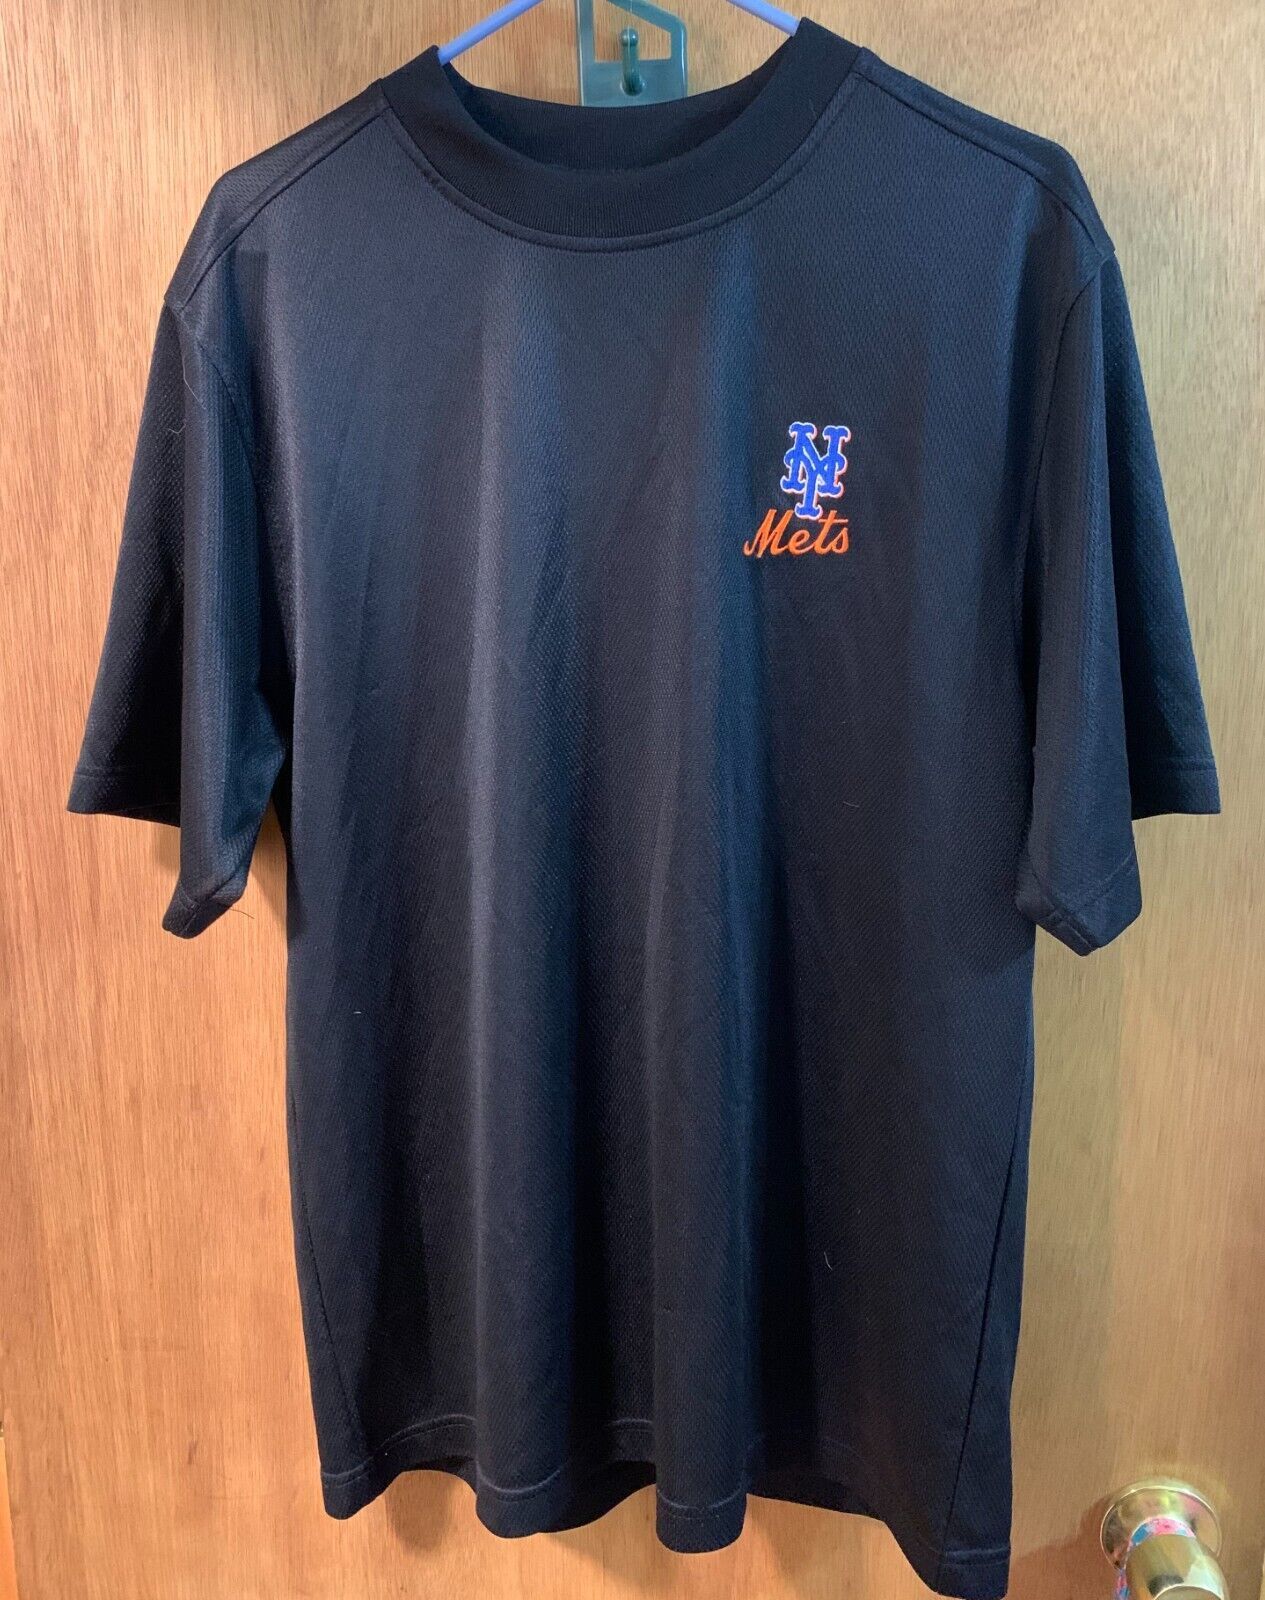 Primary image for MLB New York Mets - Black Short Sleeve Shirt - Adult Medium - Dry Fit